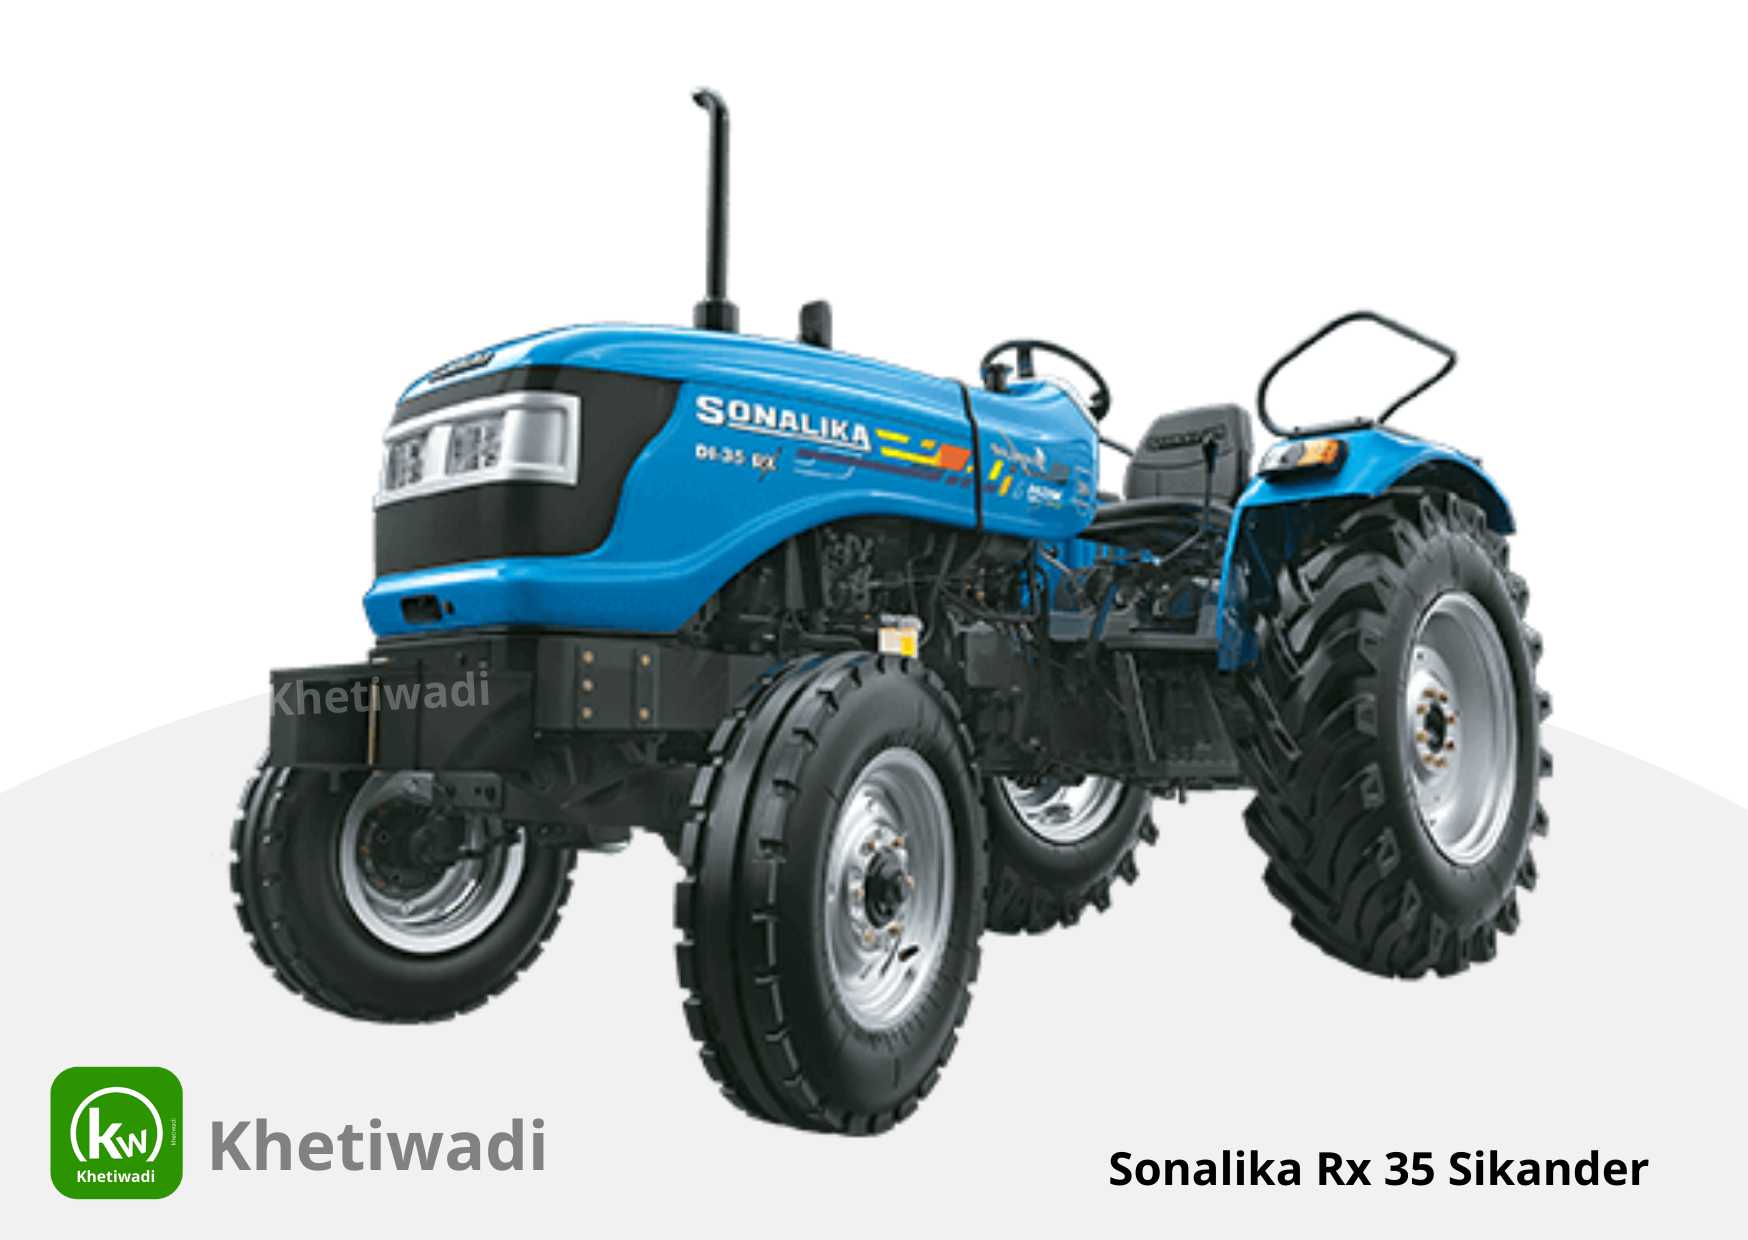 Sonalika Rx 35 Sikander full detail